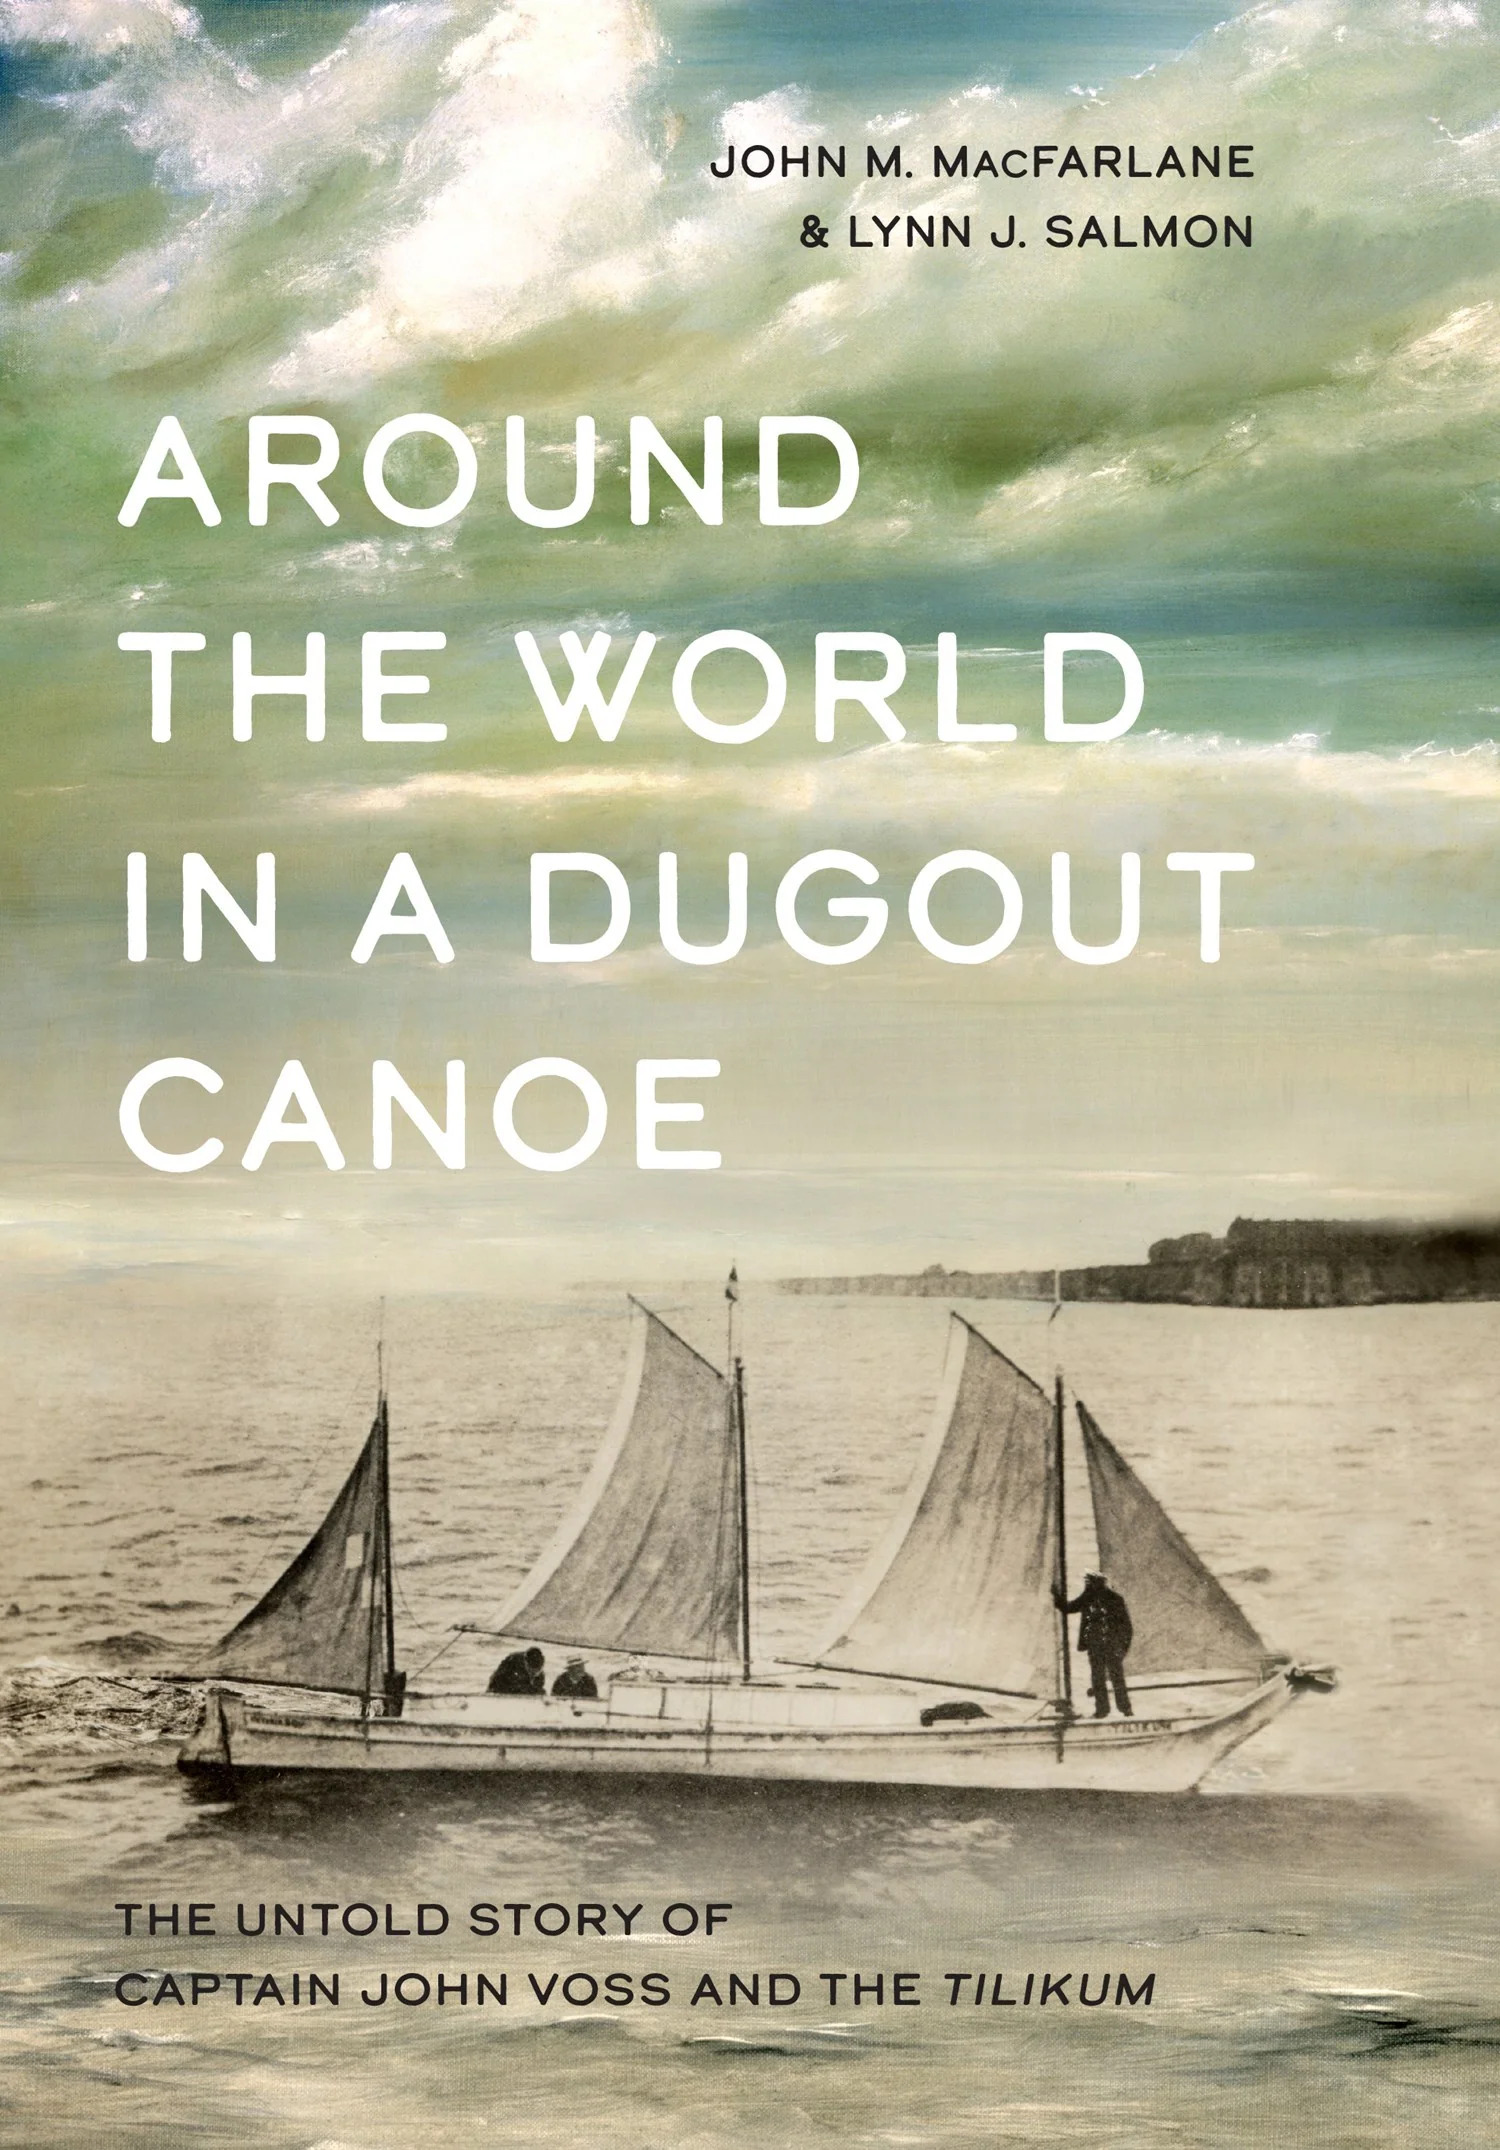 Around the World in a Dugout Canoe John M MacFarlane and Lynn J Salmon